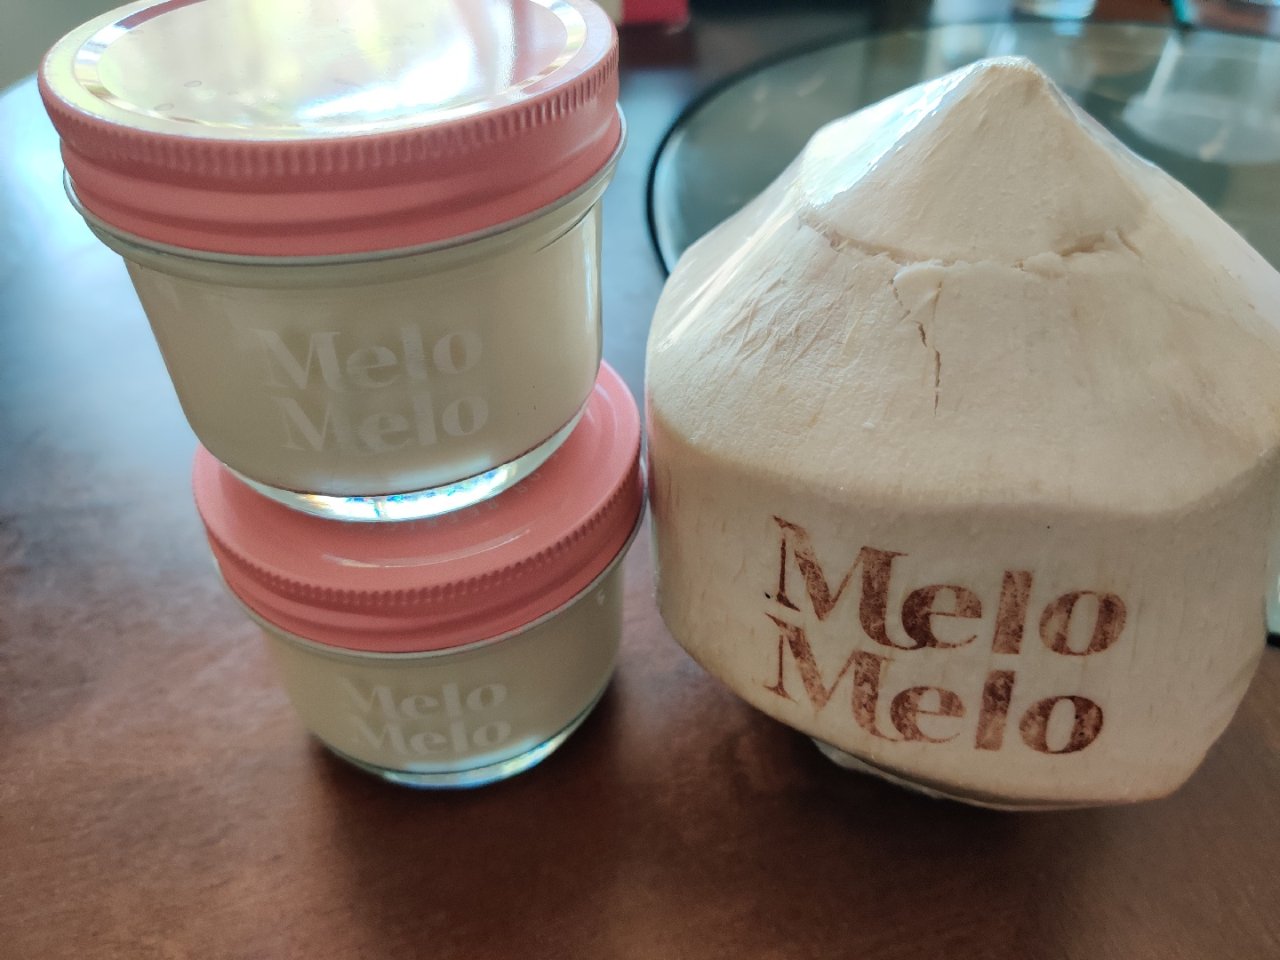 好吃的椰子冻Melo Melo...